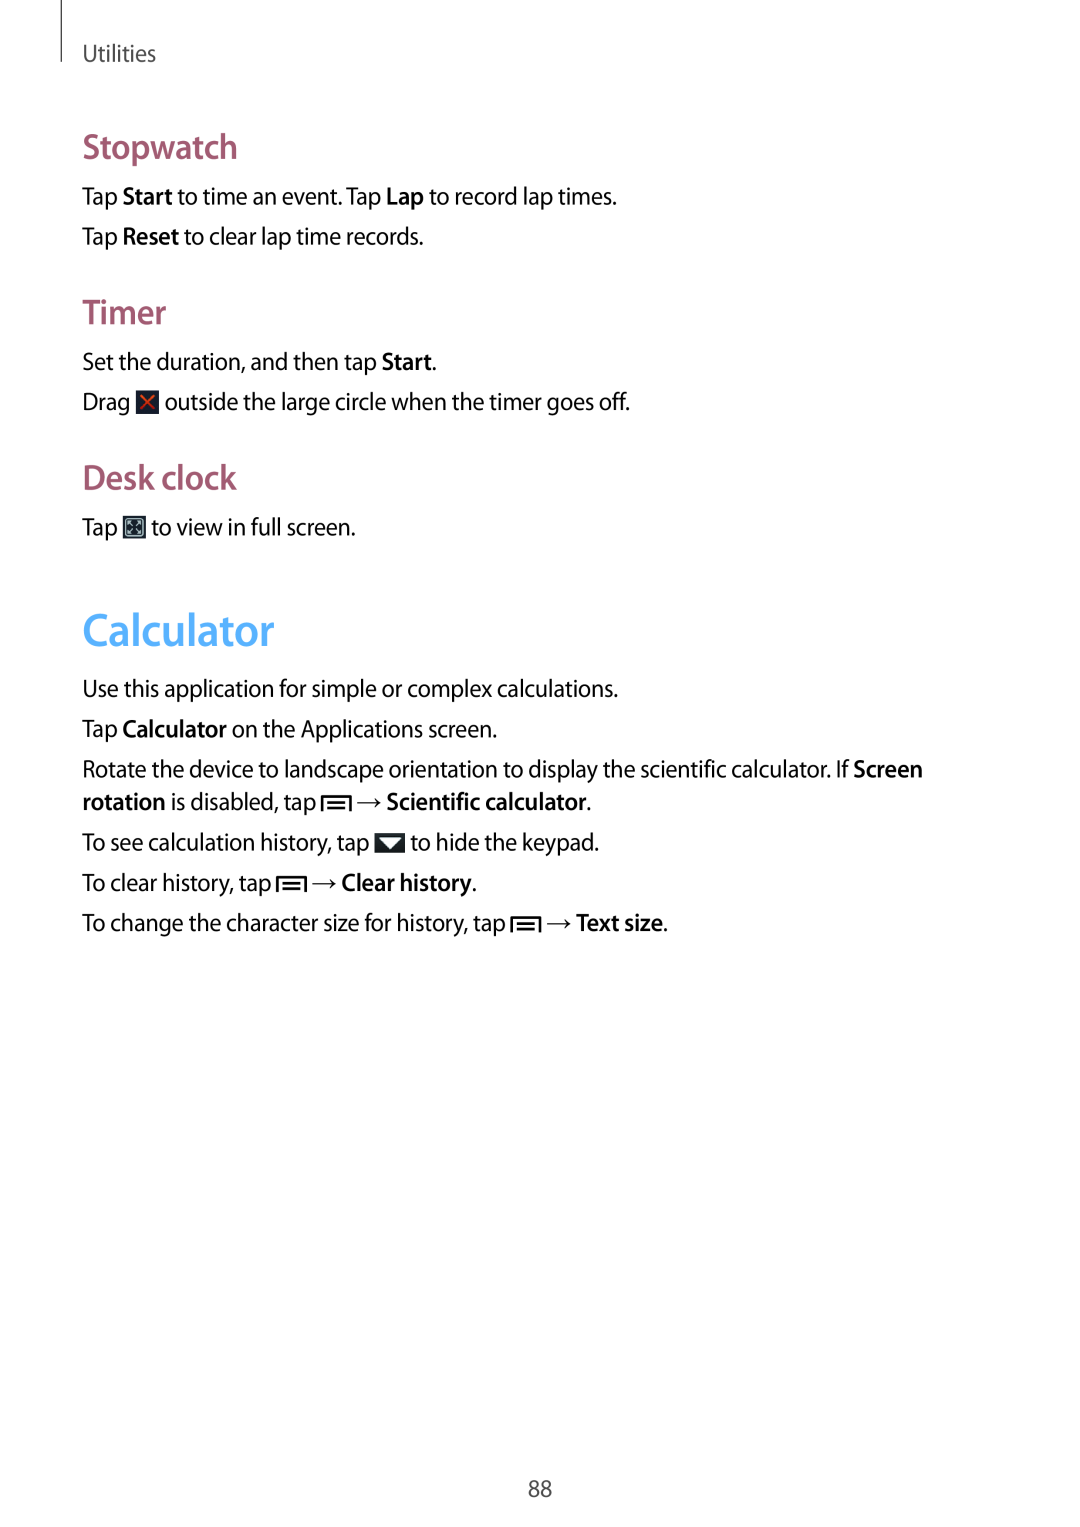 Samsung GT-I8190MBNNRJ manual Calculator, Stopwatch, Timer, Desk clock, →Scientific calculator, →Clear history, Utilities 